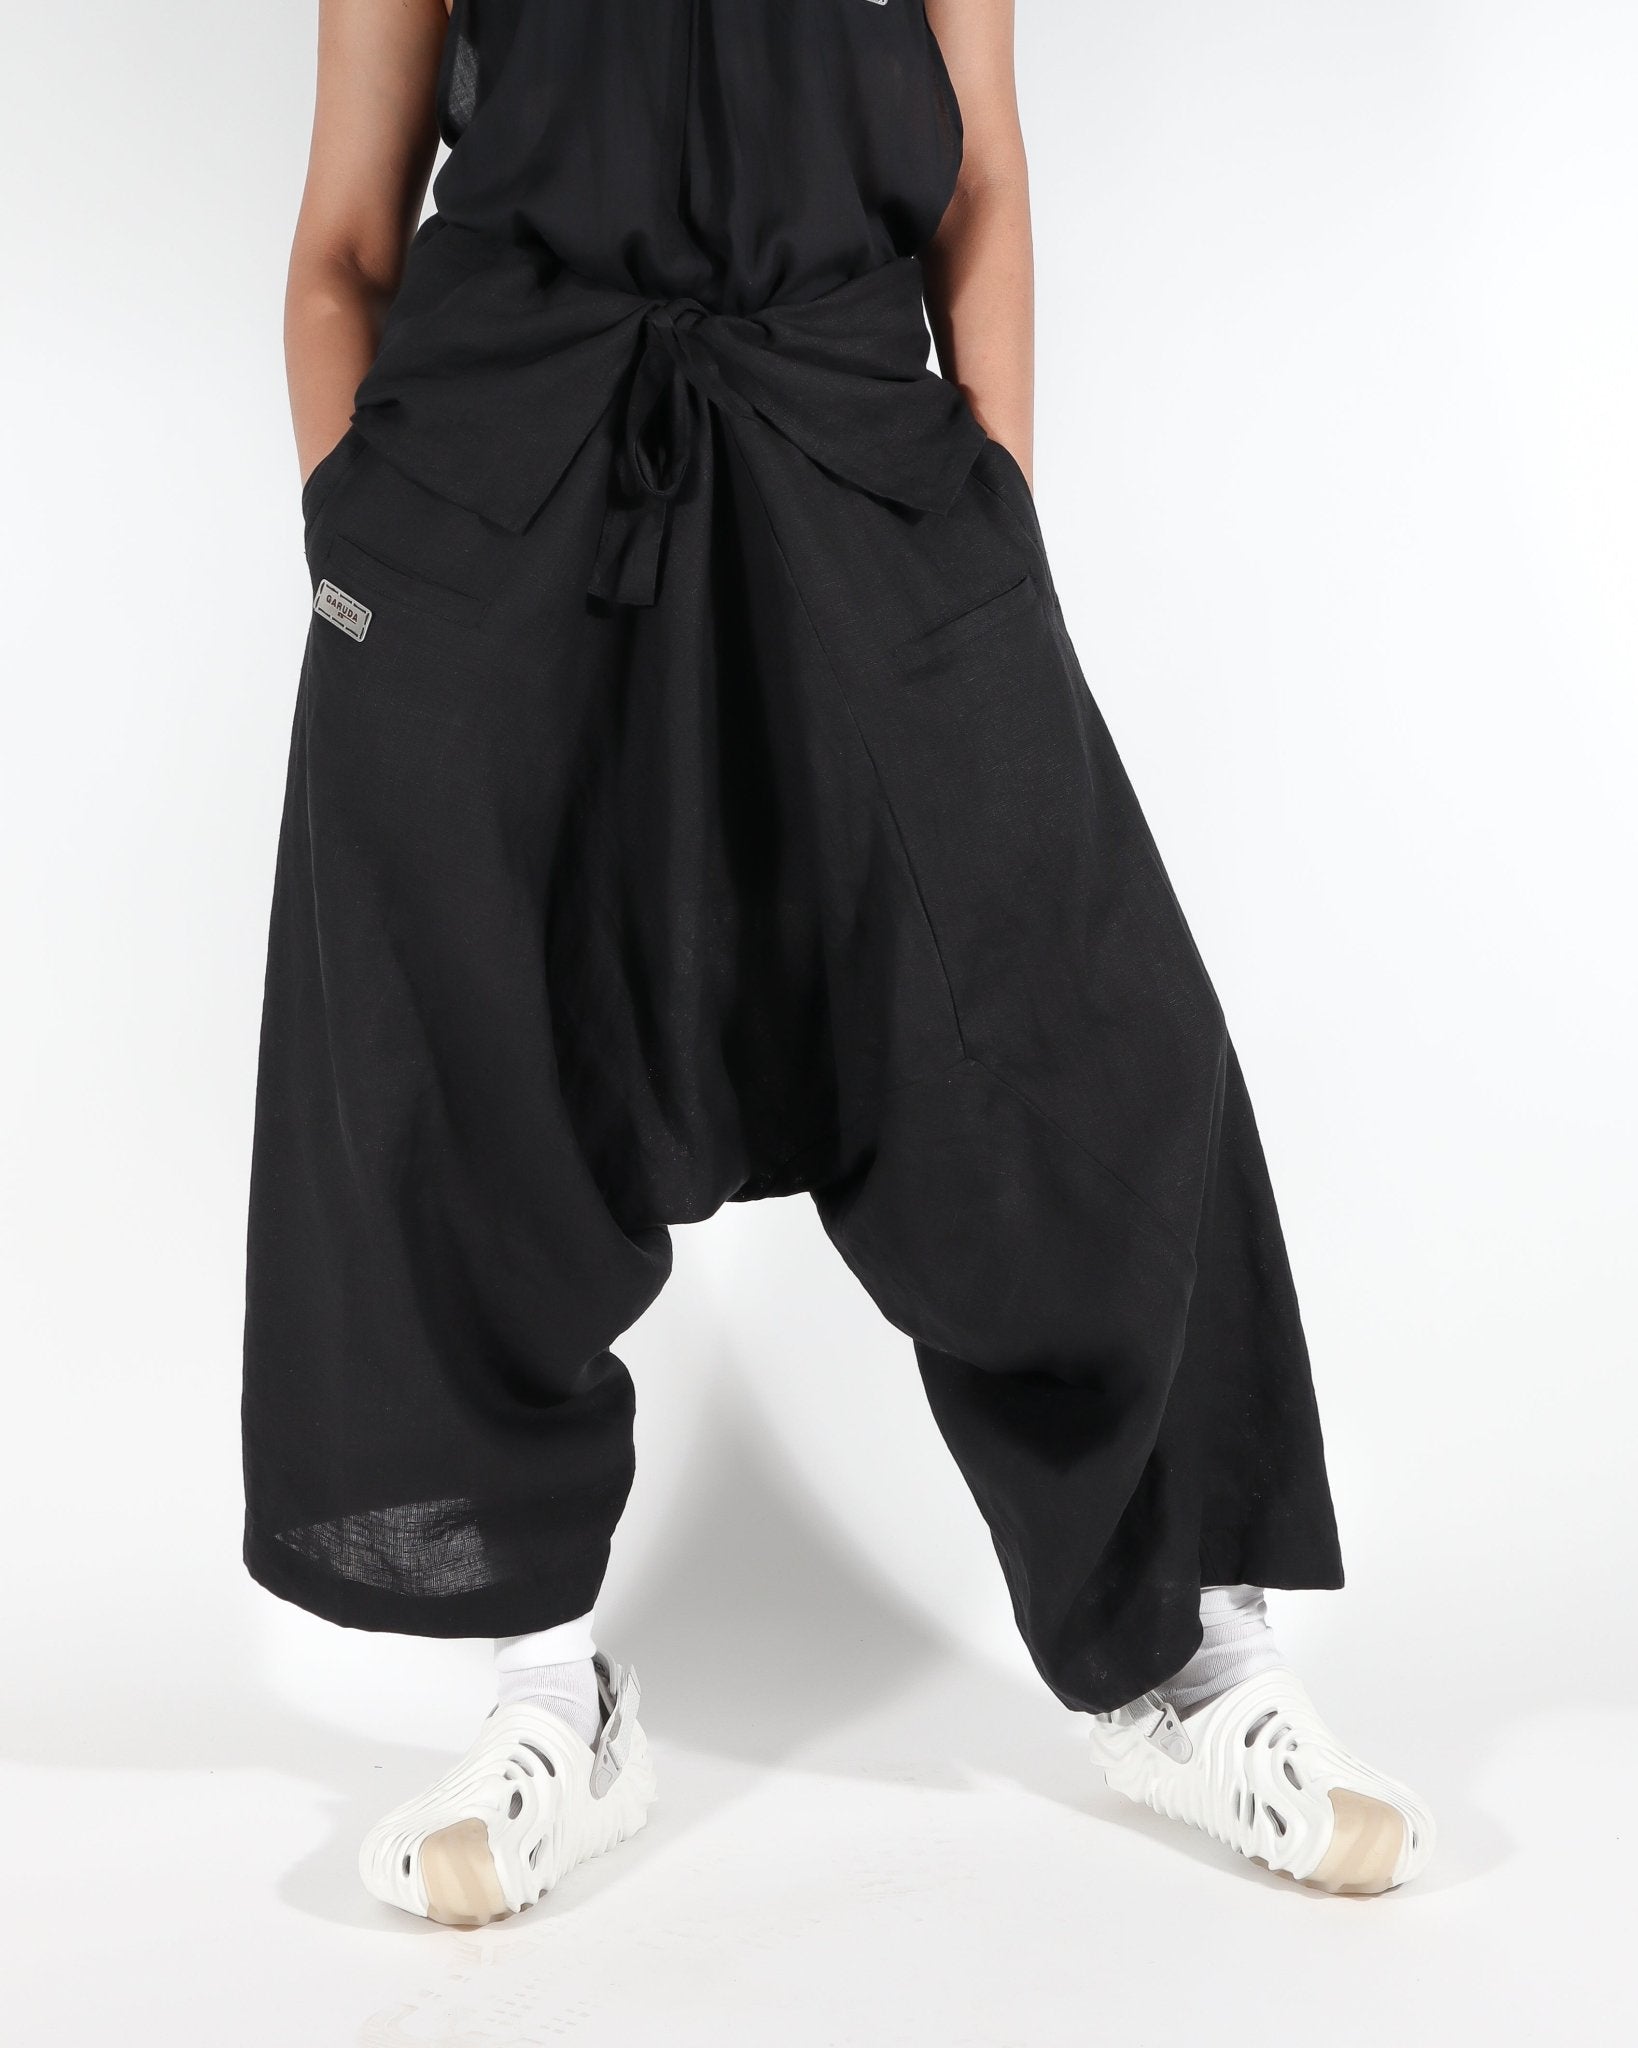 Buy NICE WONDER Women's Regular Fit Salwar Pants (Combo Pack of 2) (XL,  Black, White) at Amazon.in